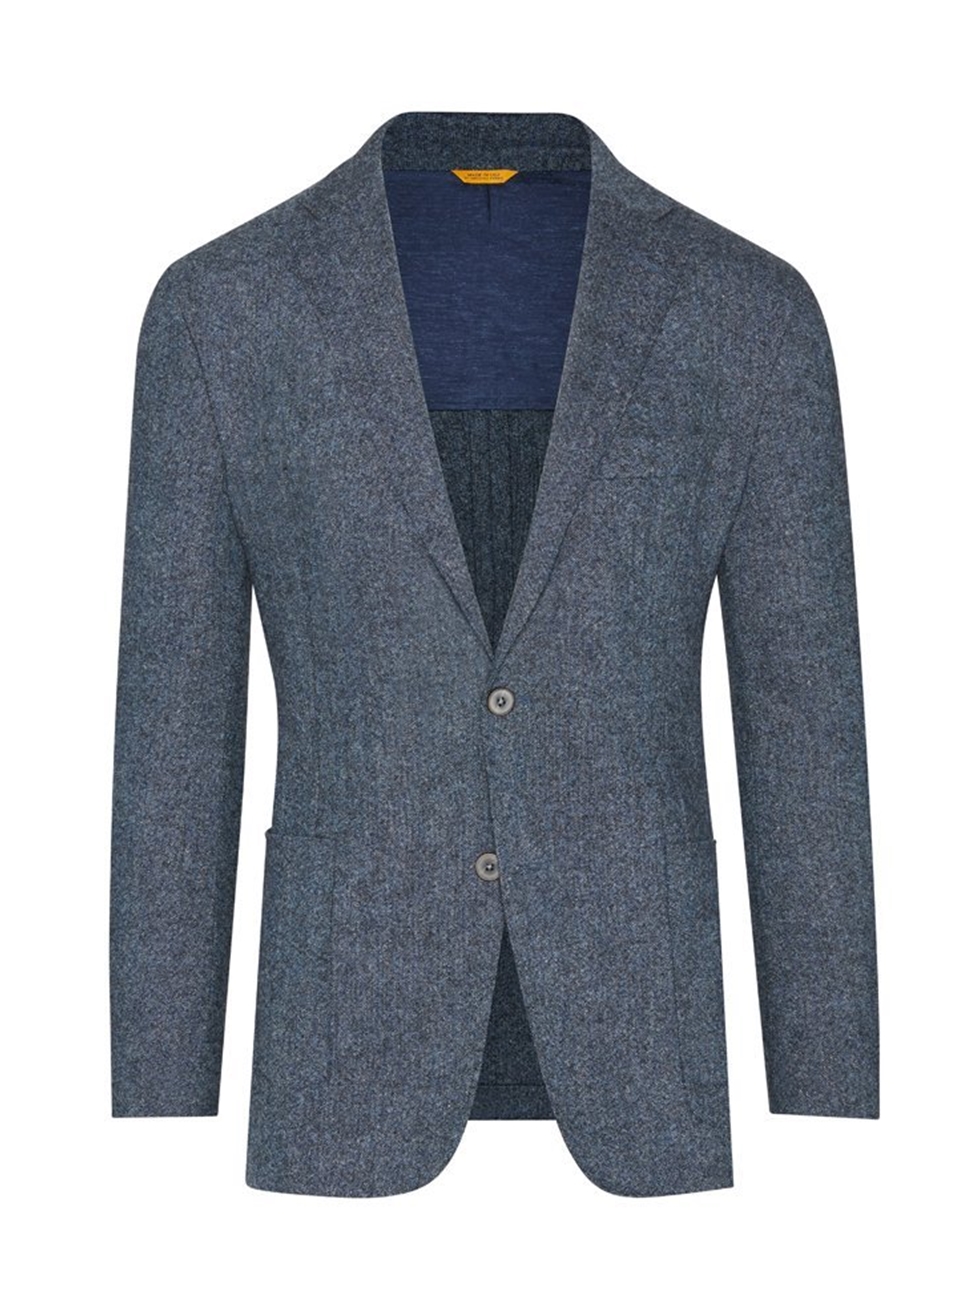 CAEA-tweed-jacket4 - Style of Sam